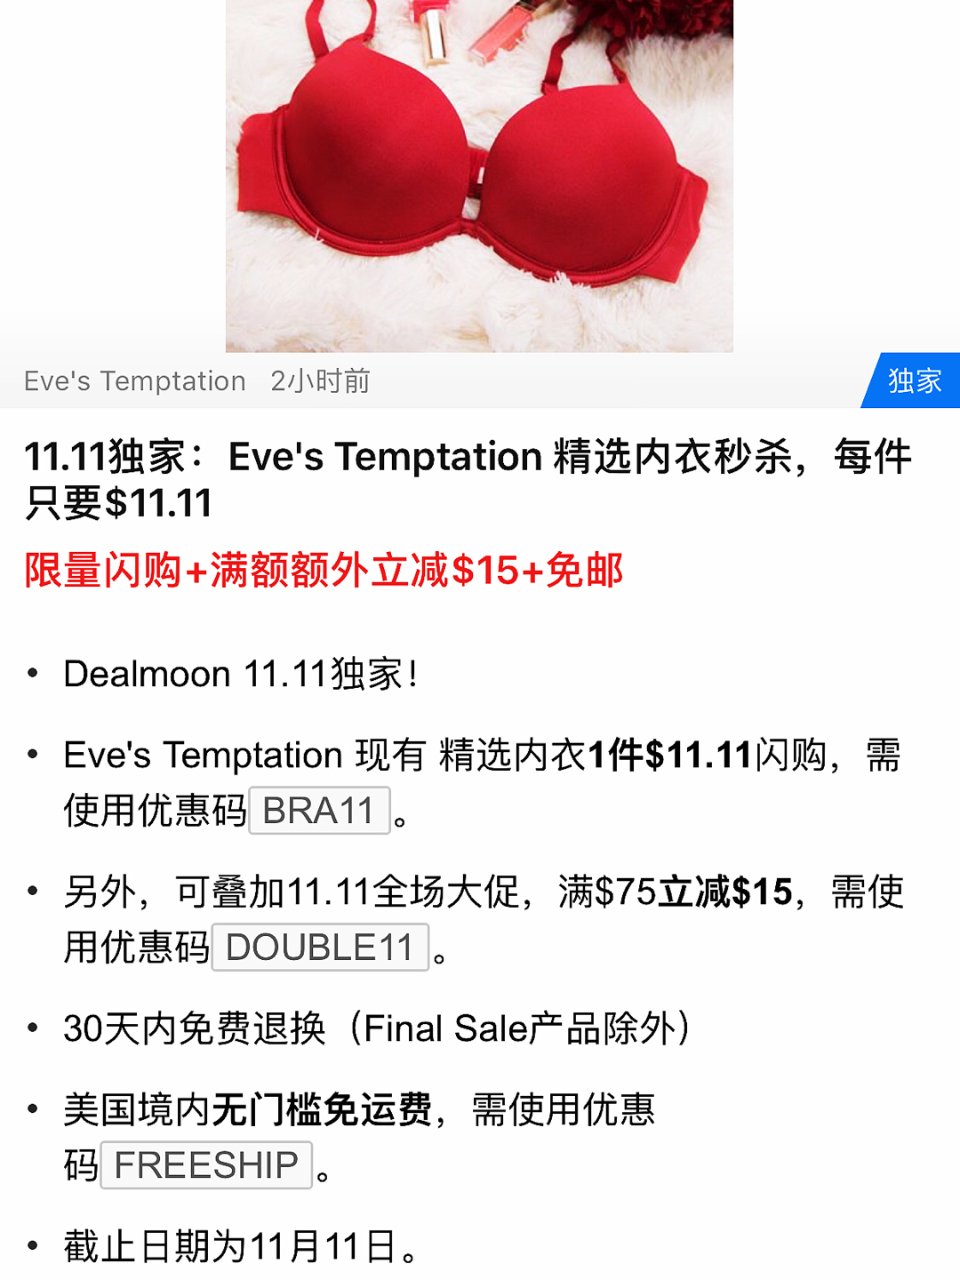 Eve's Temptation 夏娃的诱惑